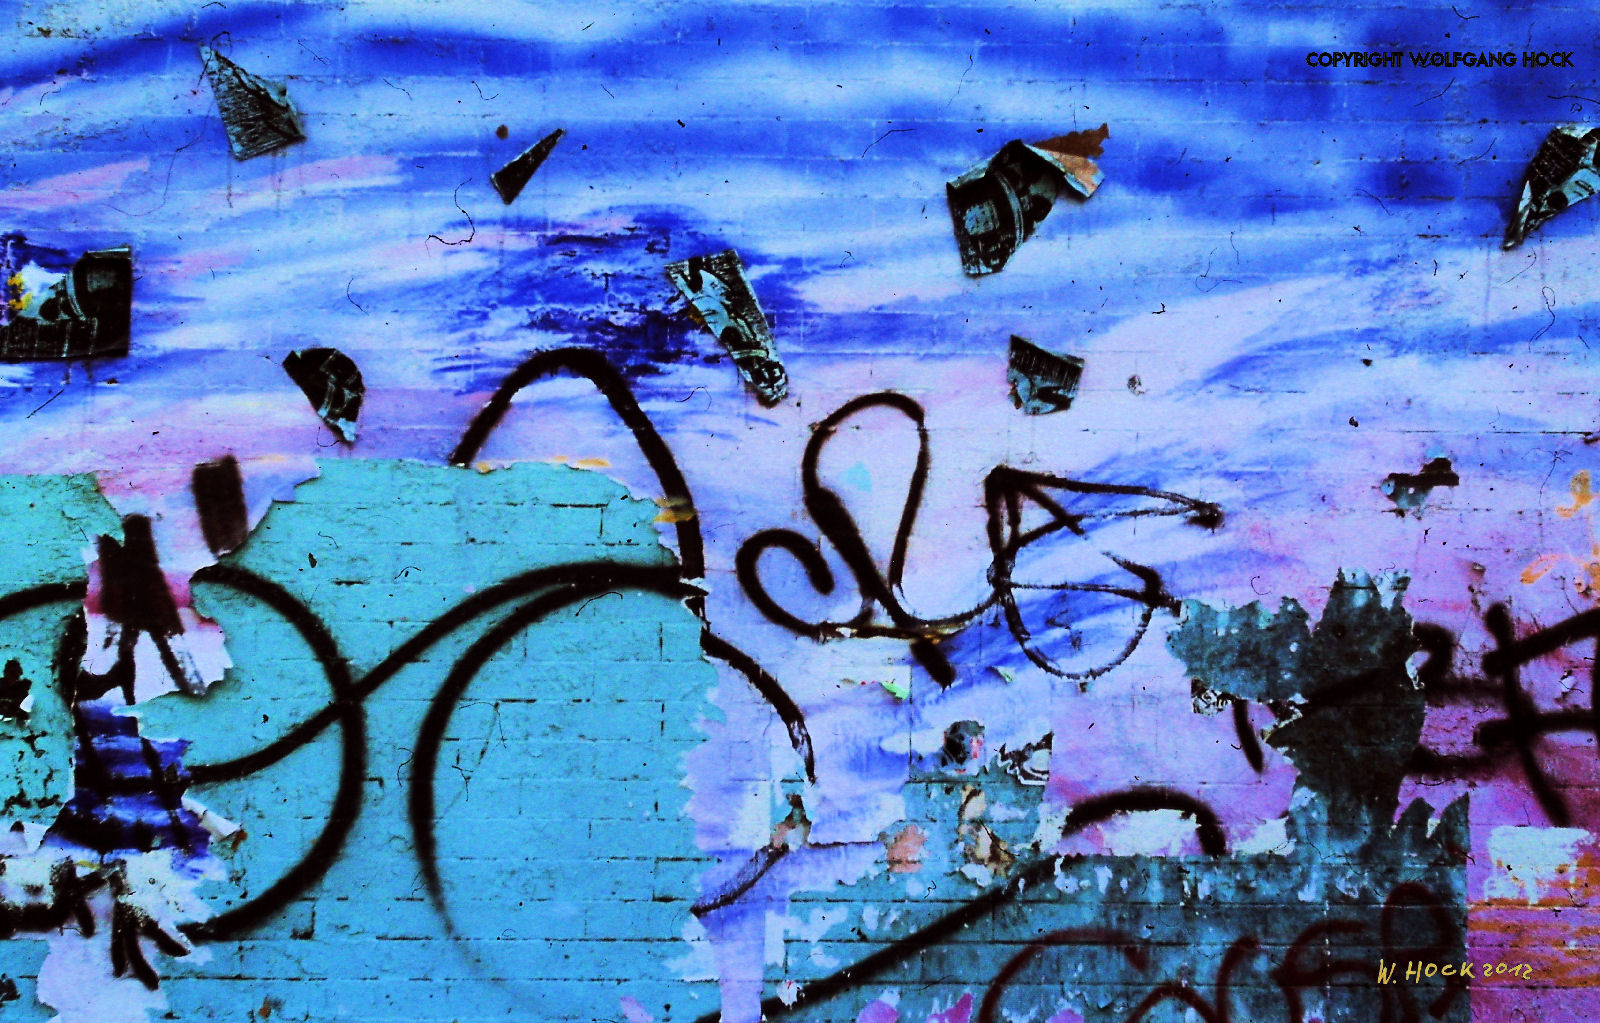 Graffiti III 2012   Inkjet printed photographic mixed media on paper, 66 x 42 cm